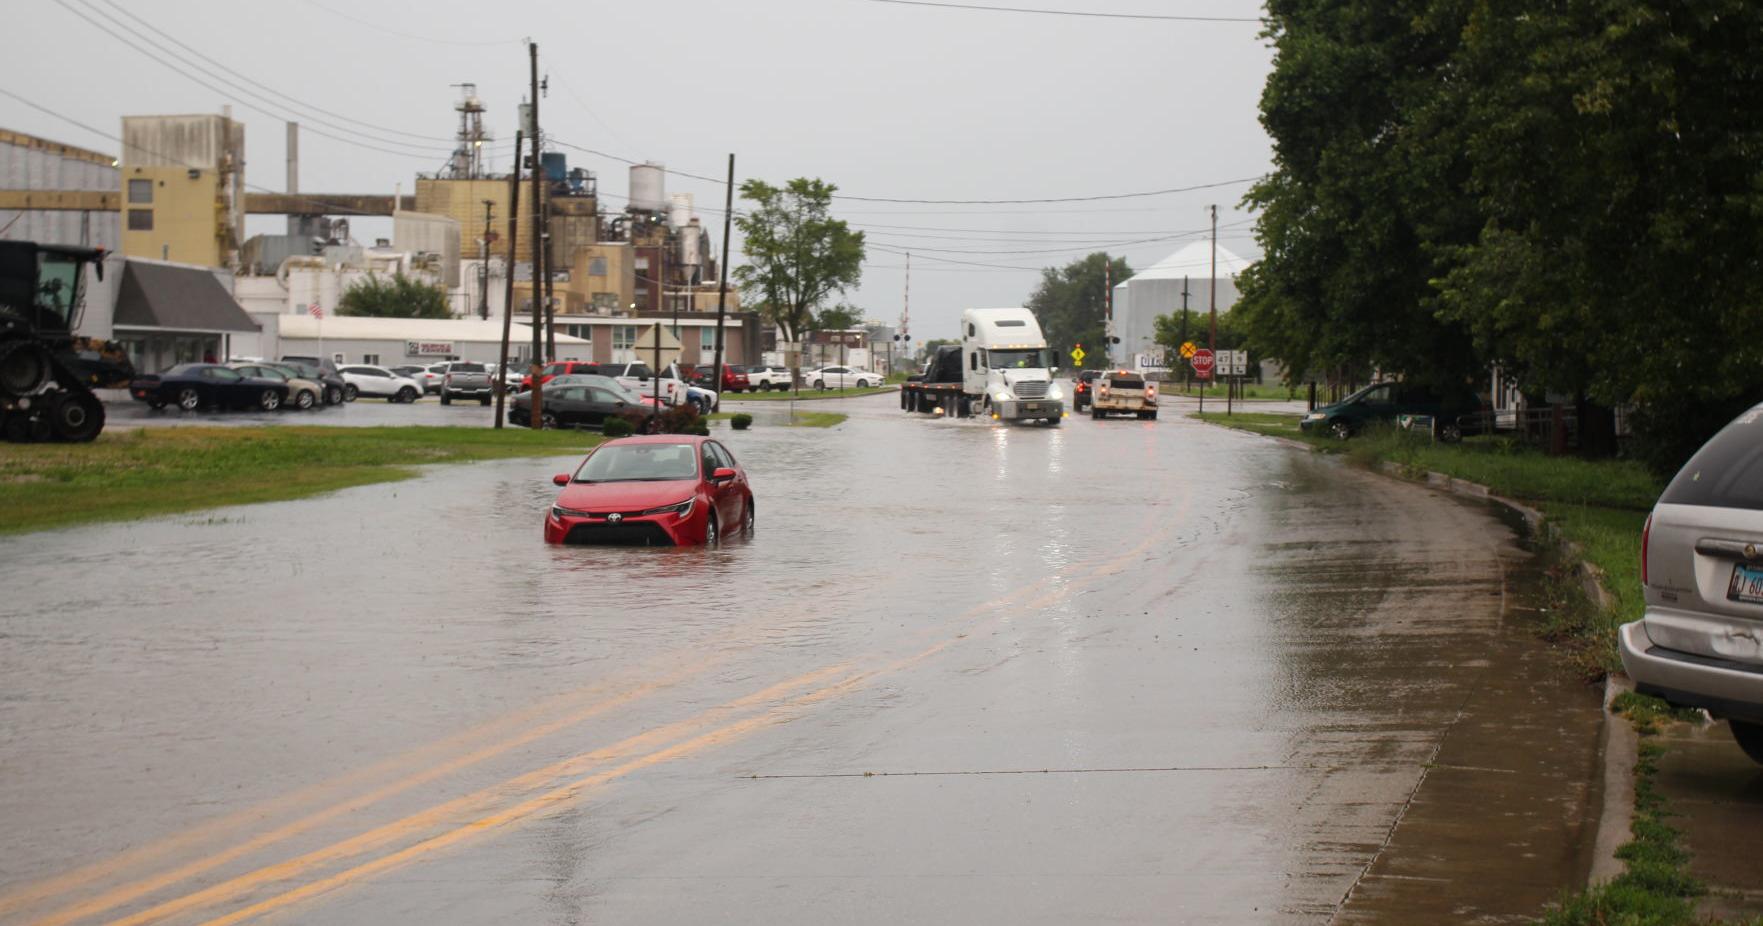 Farmers-Merchants donates $15K for Gibson City flood relief